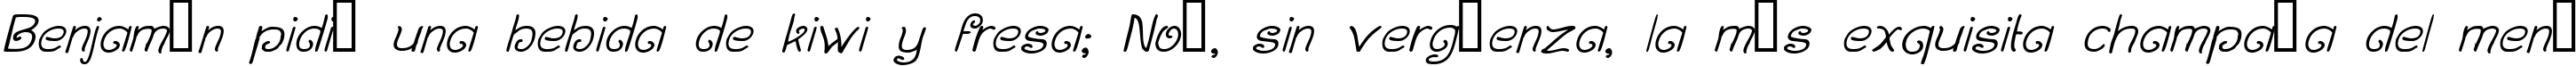 Пример написания шрифтом Curlmudgeon Italic текста на испанском